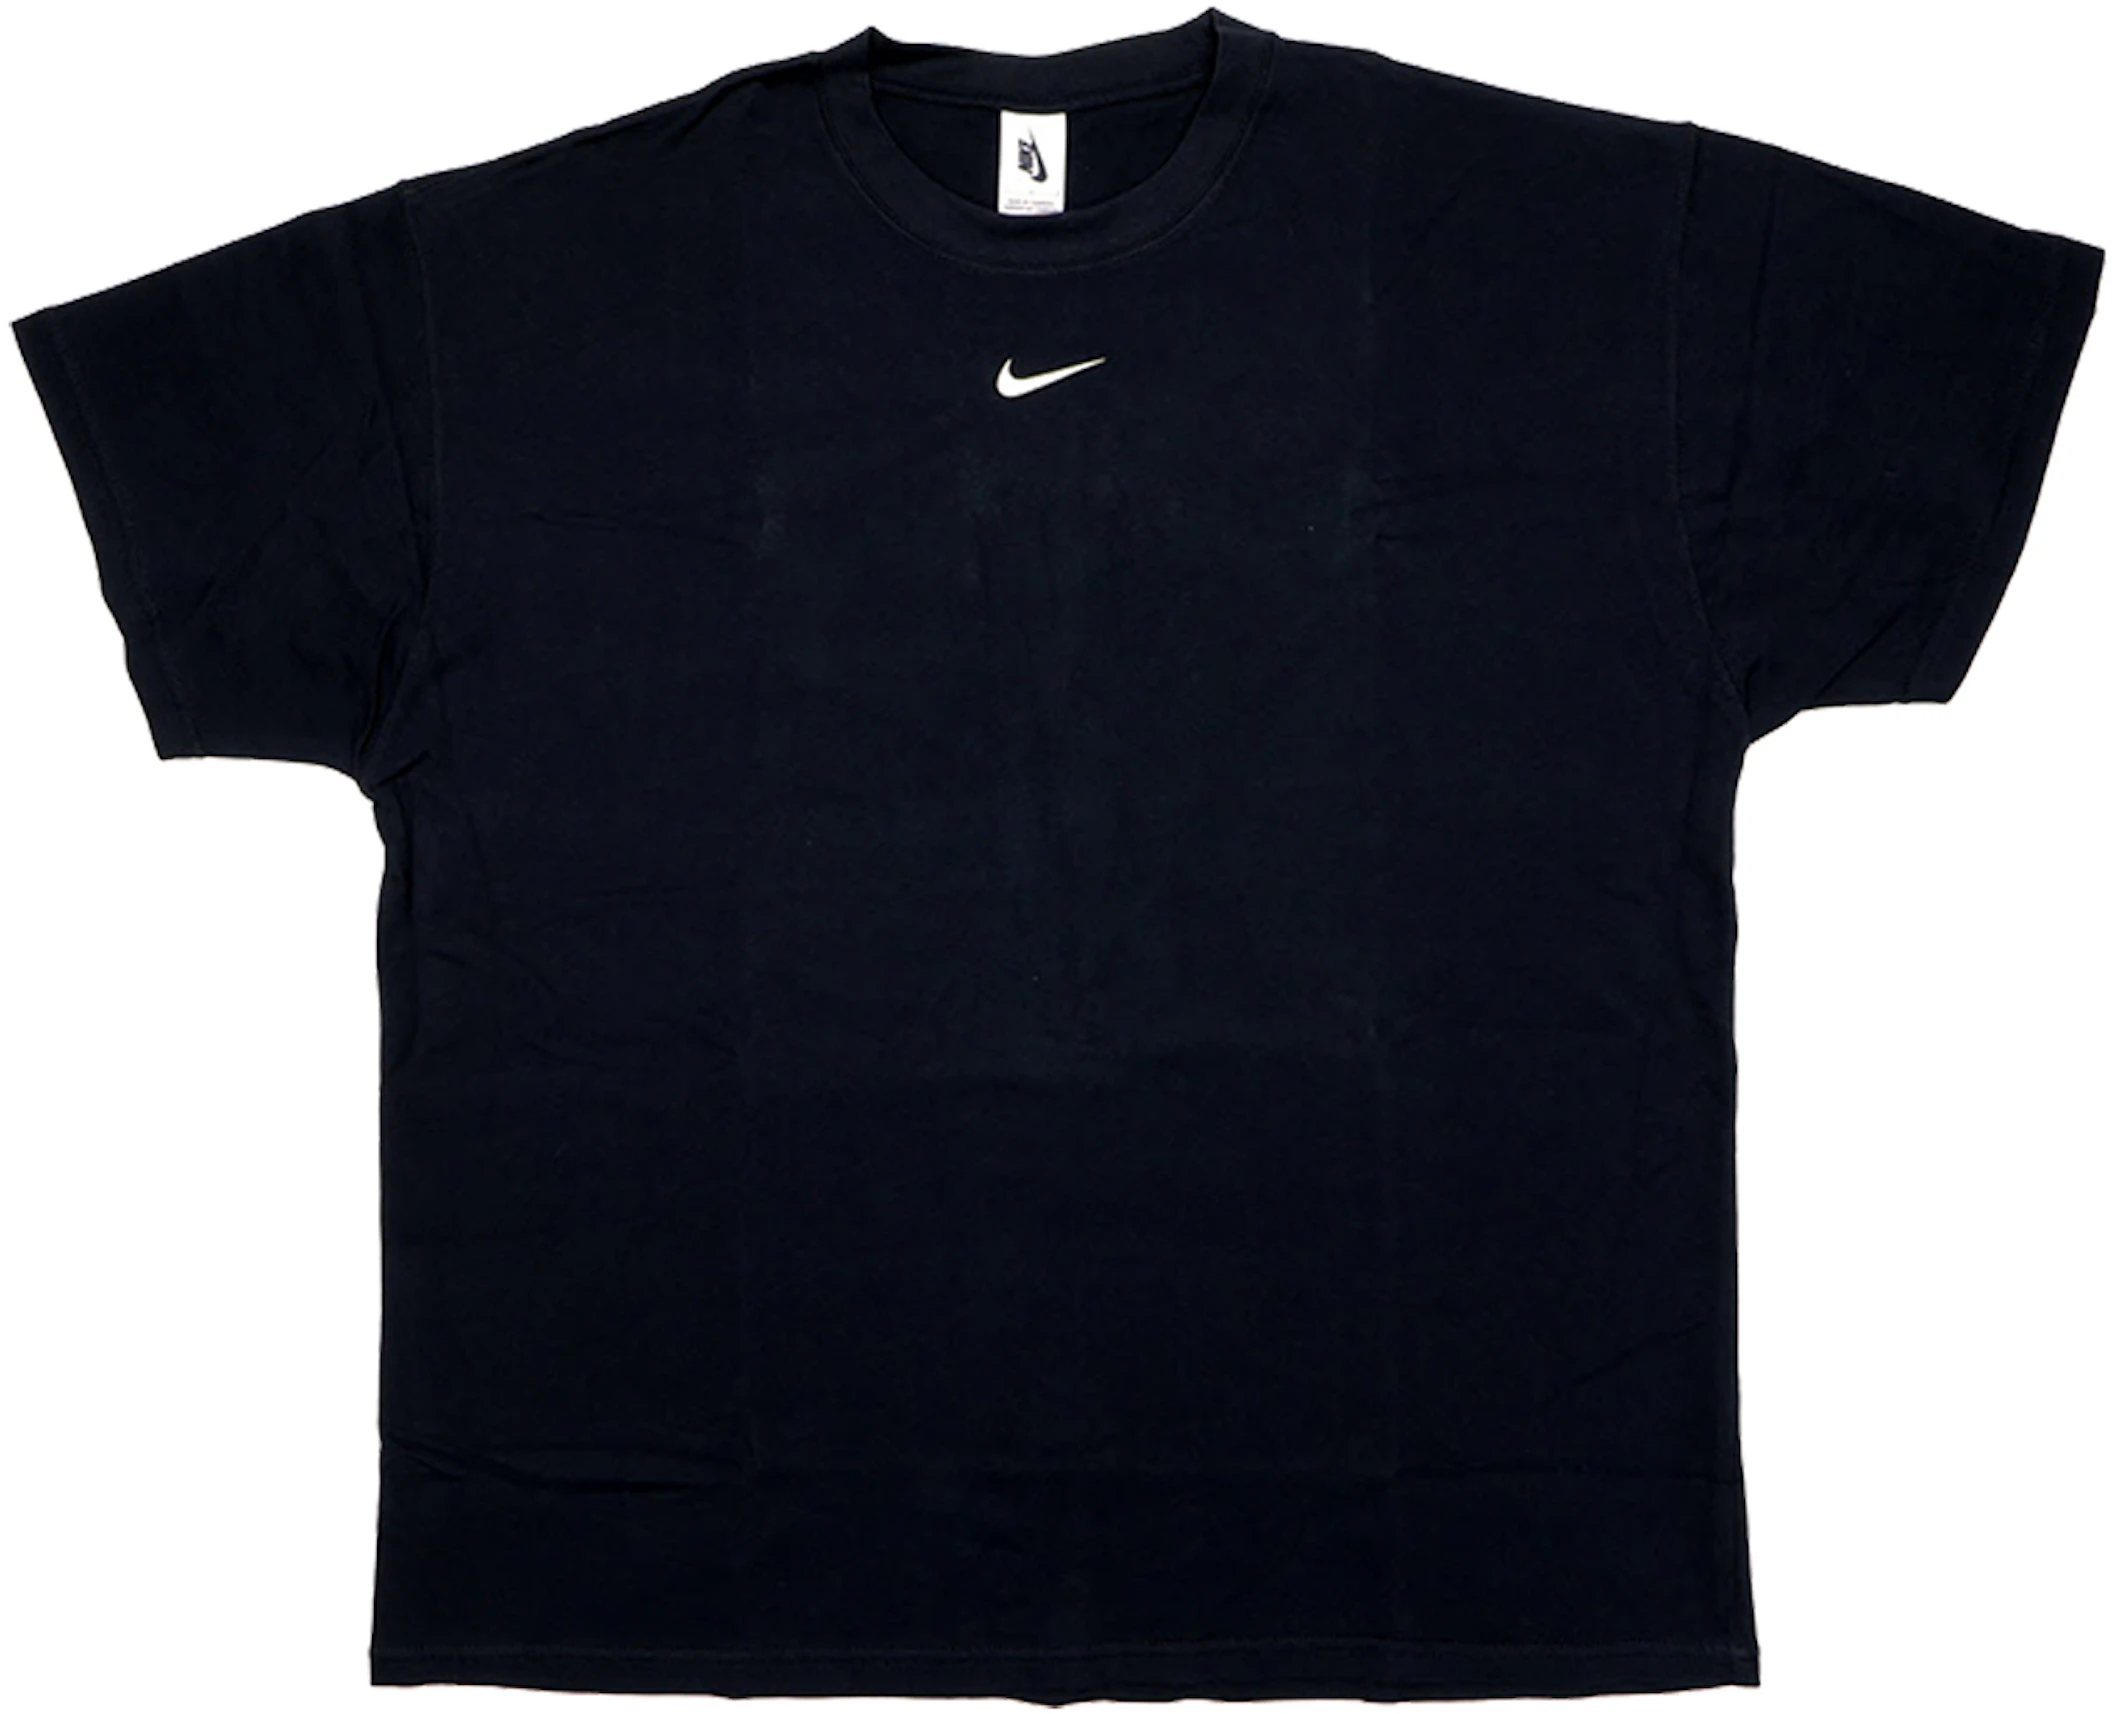 Penélope Poner asignación FEAR OF GOD x Nike Air Fear of God T-Shirt Black - FW19 - ES